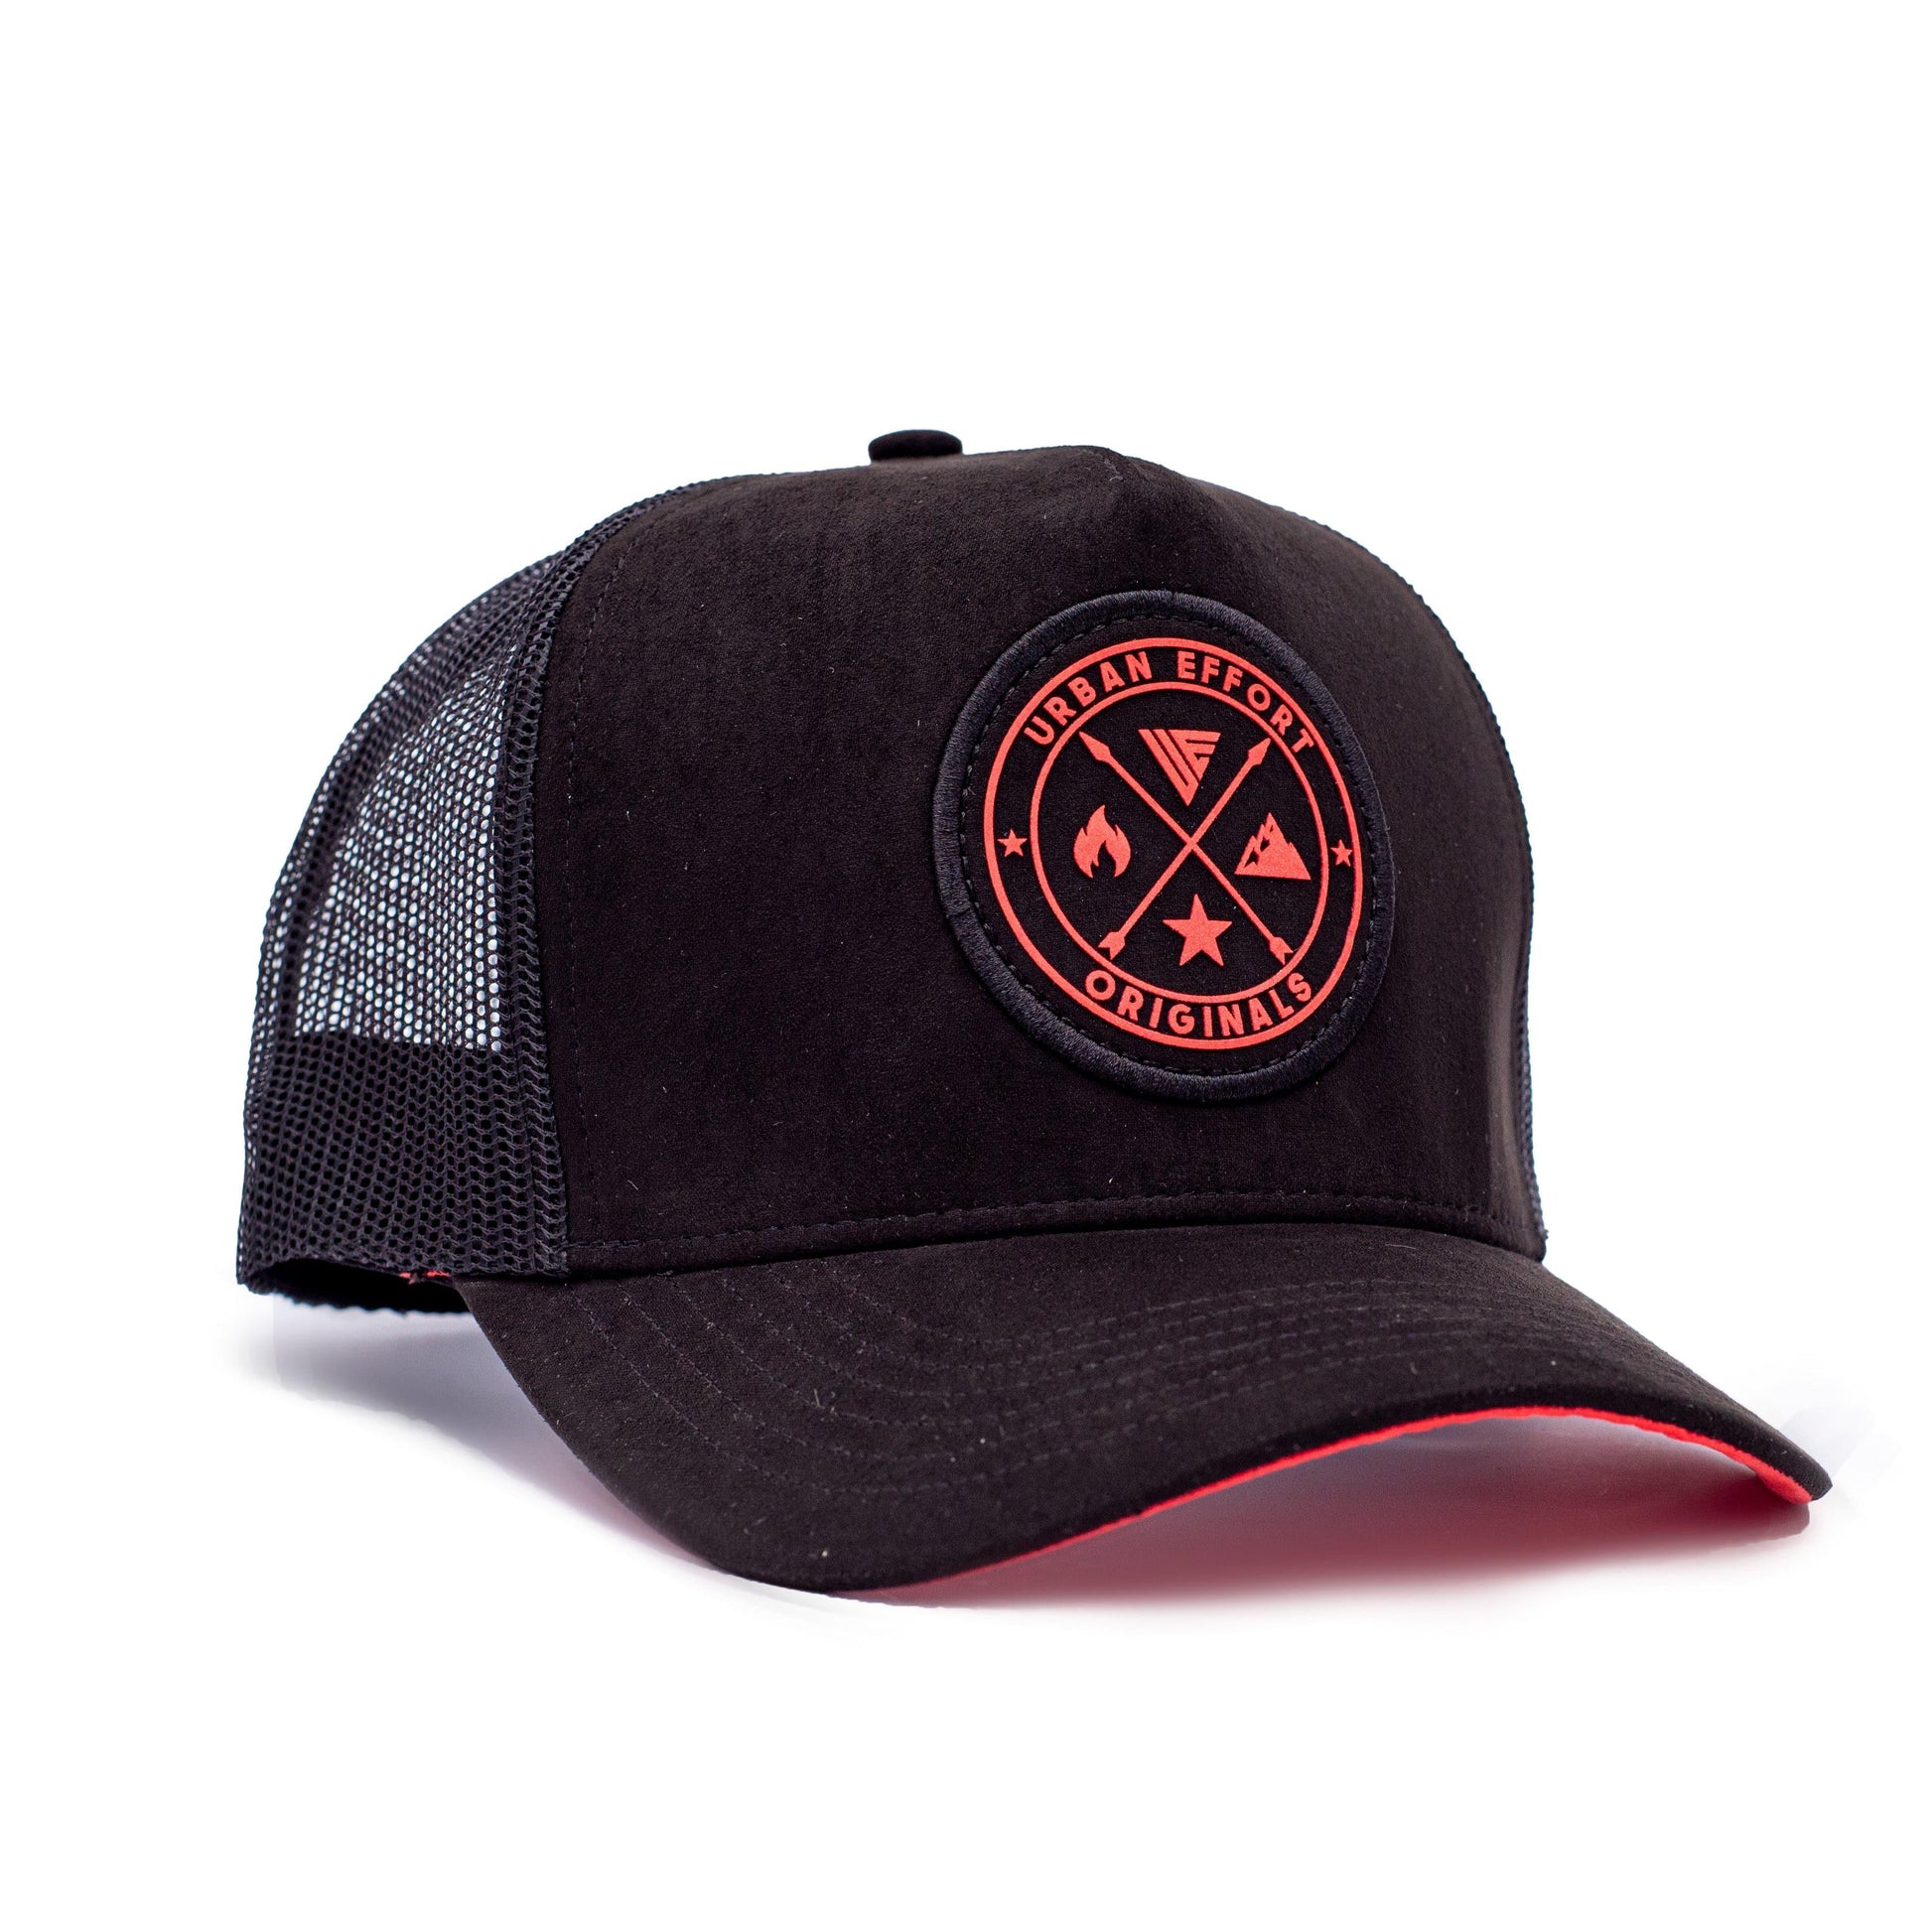 Black + Red Trucker Hat - Original's Urban Effort | High-Quality Modern Street Wear Caps